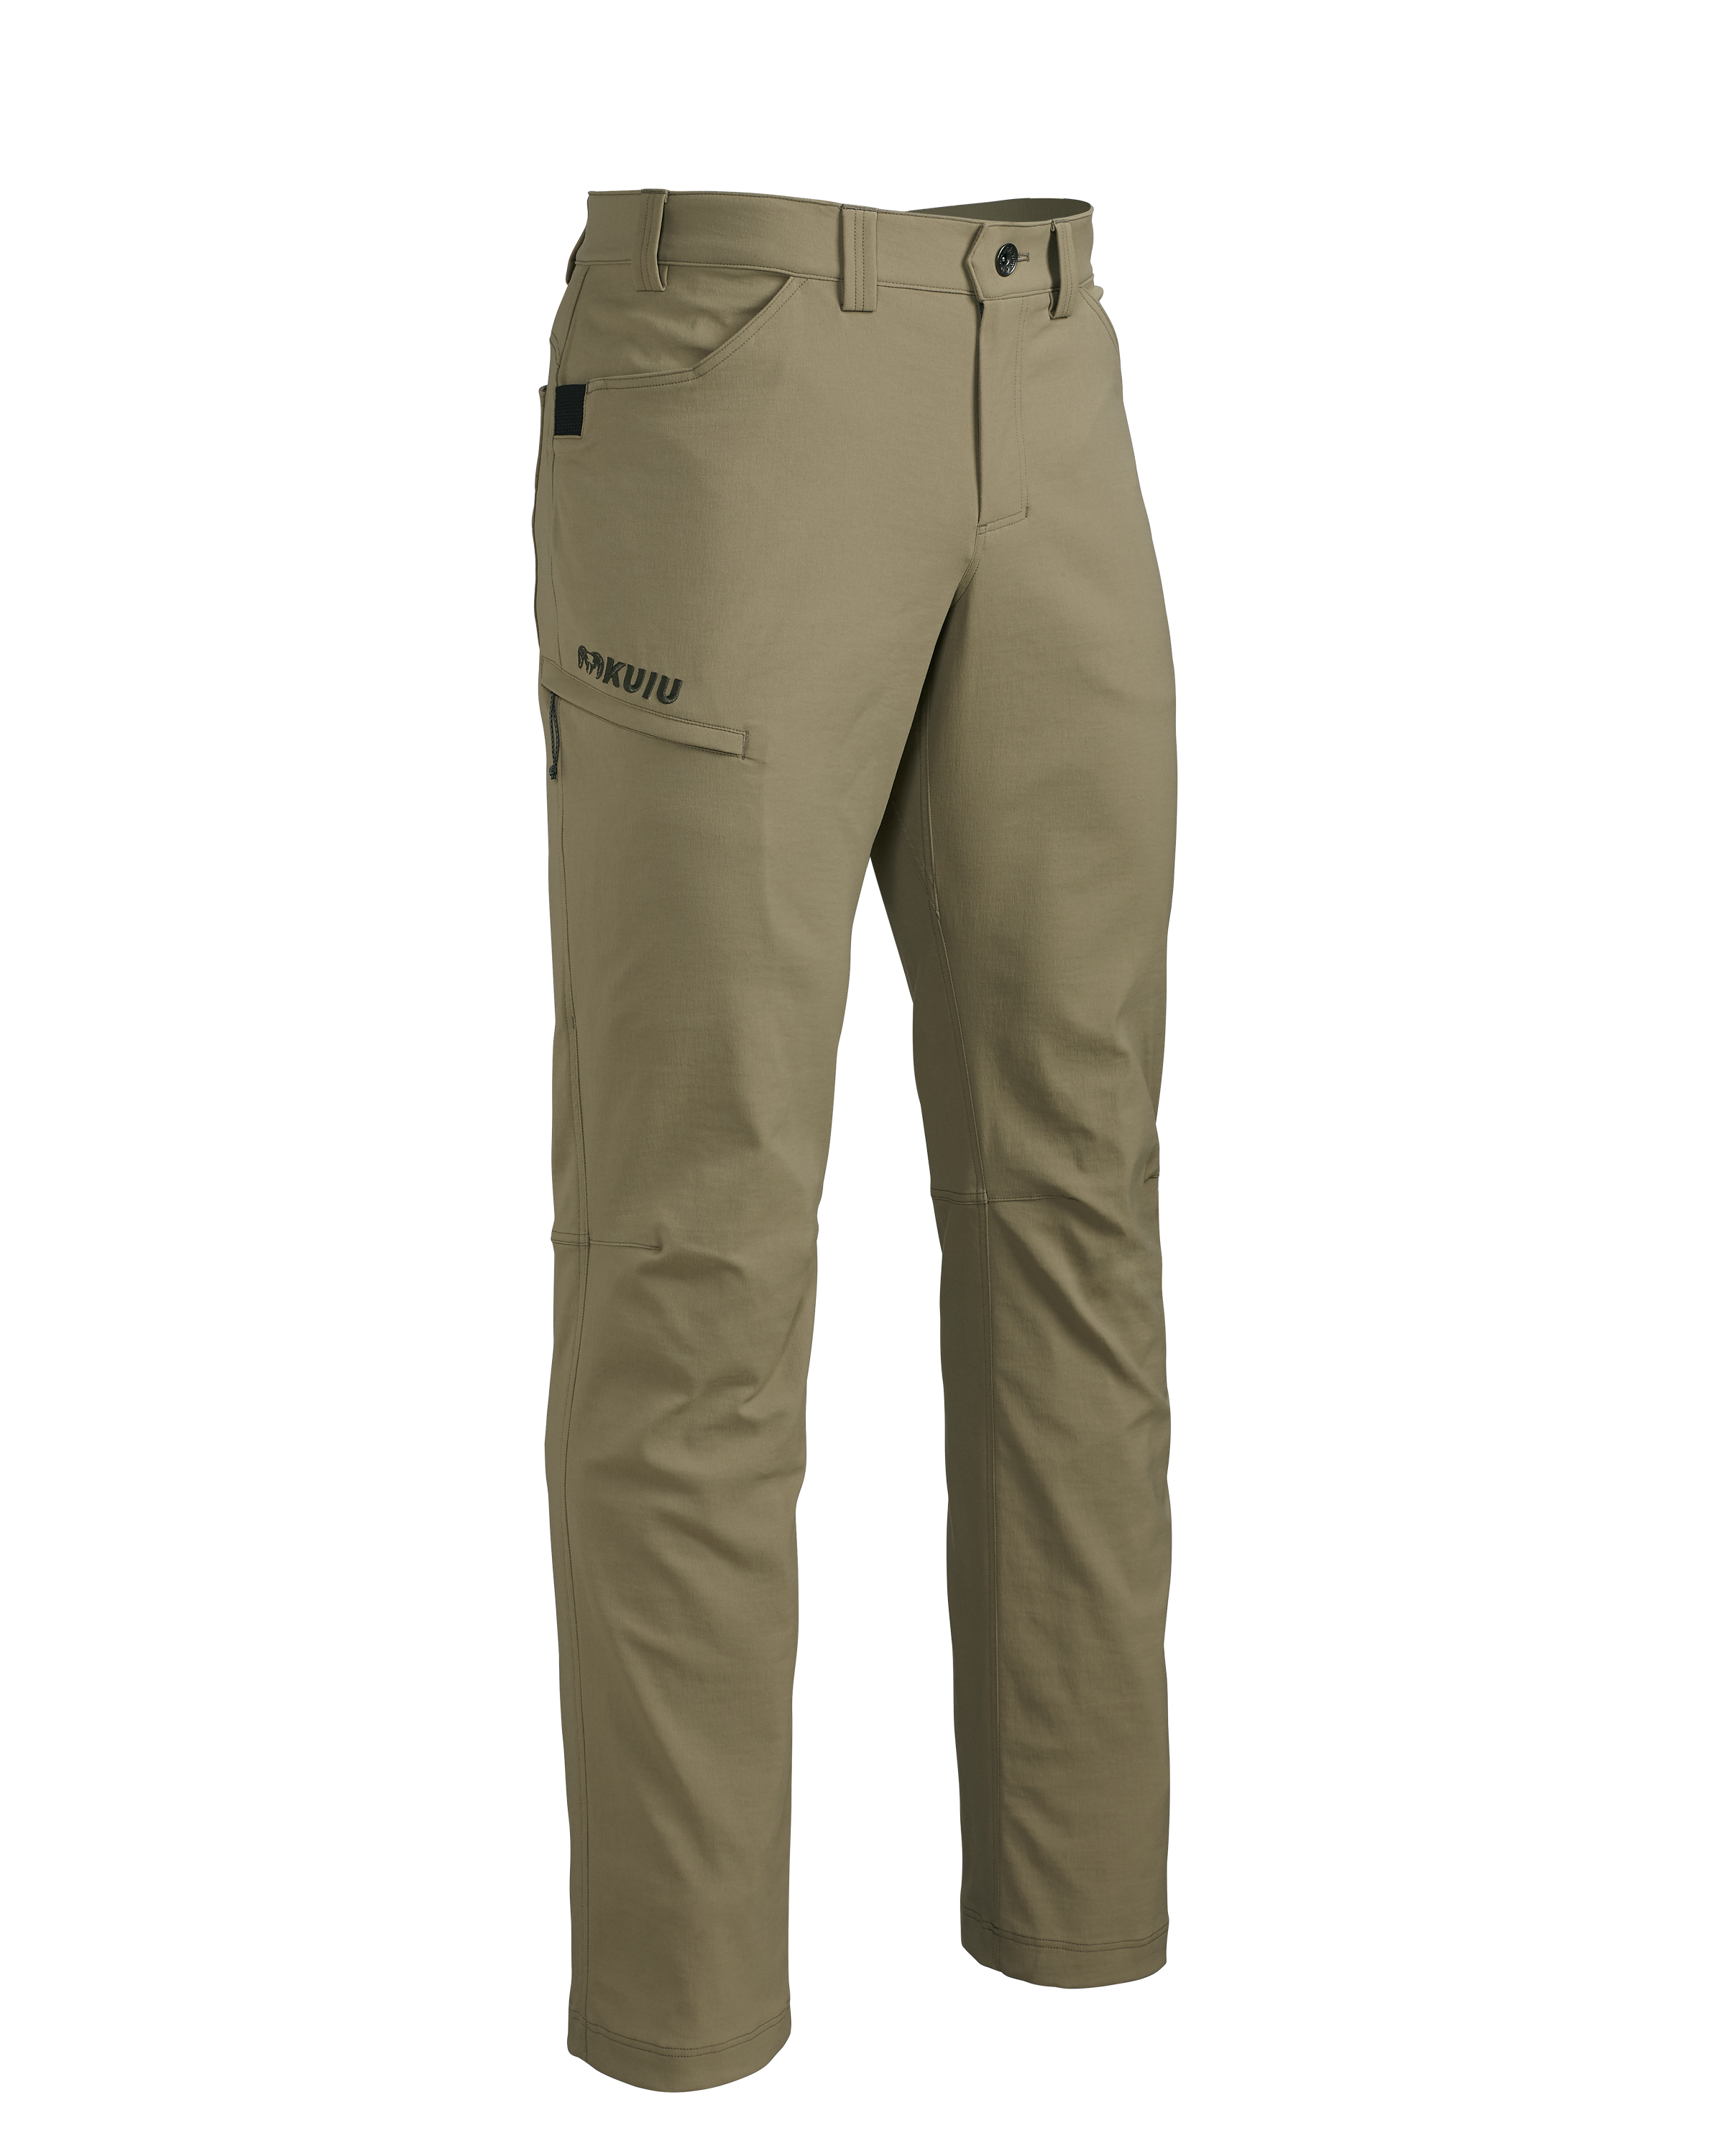 KUIU Switchback Hunting Pant in Khaki | Size 38